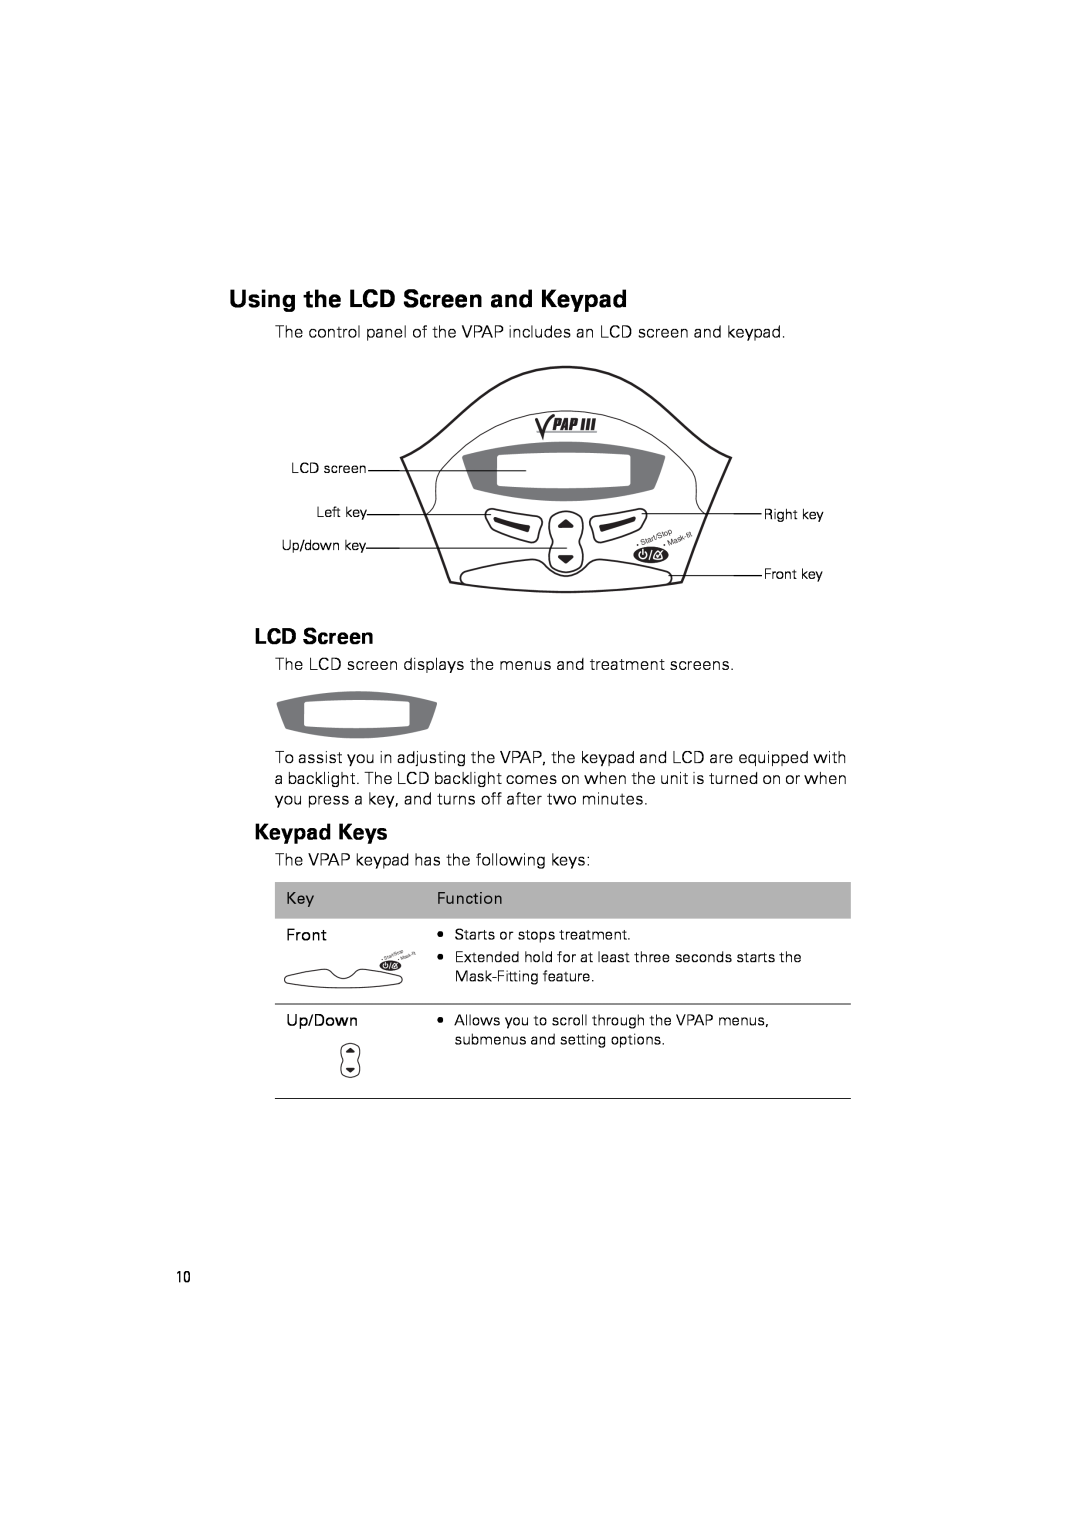 ResMed III user manual Using the LCD Screen and Keypad, Keypad Keys 